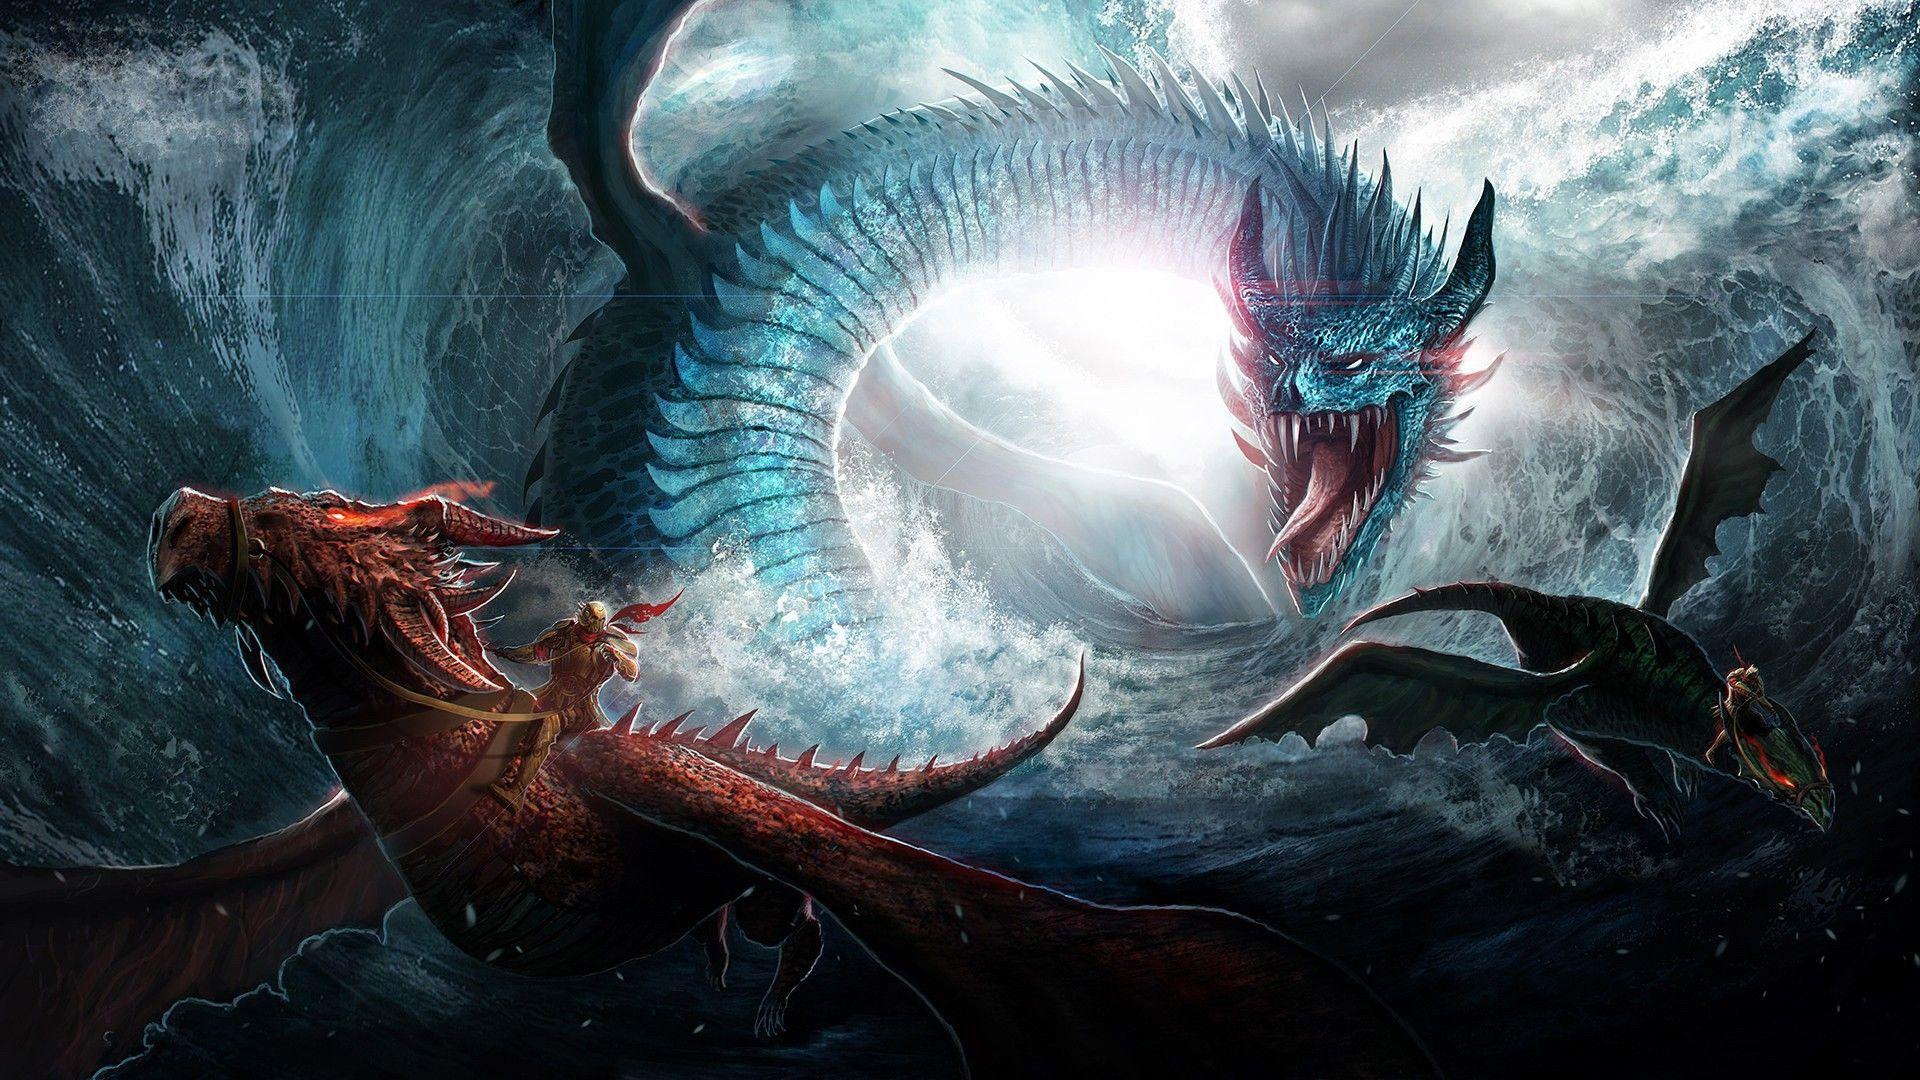 Ice Dragon Game of Thrones Wallpaper Free Ice Dragon